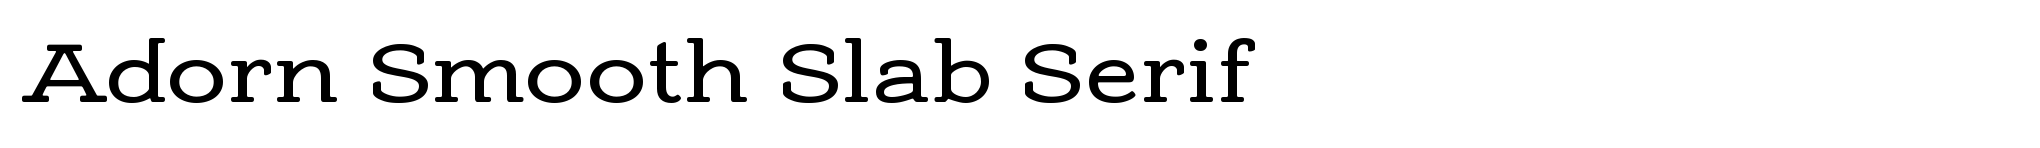 Adorn Smooth Slab Serif image